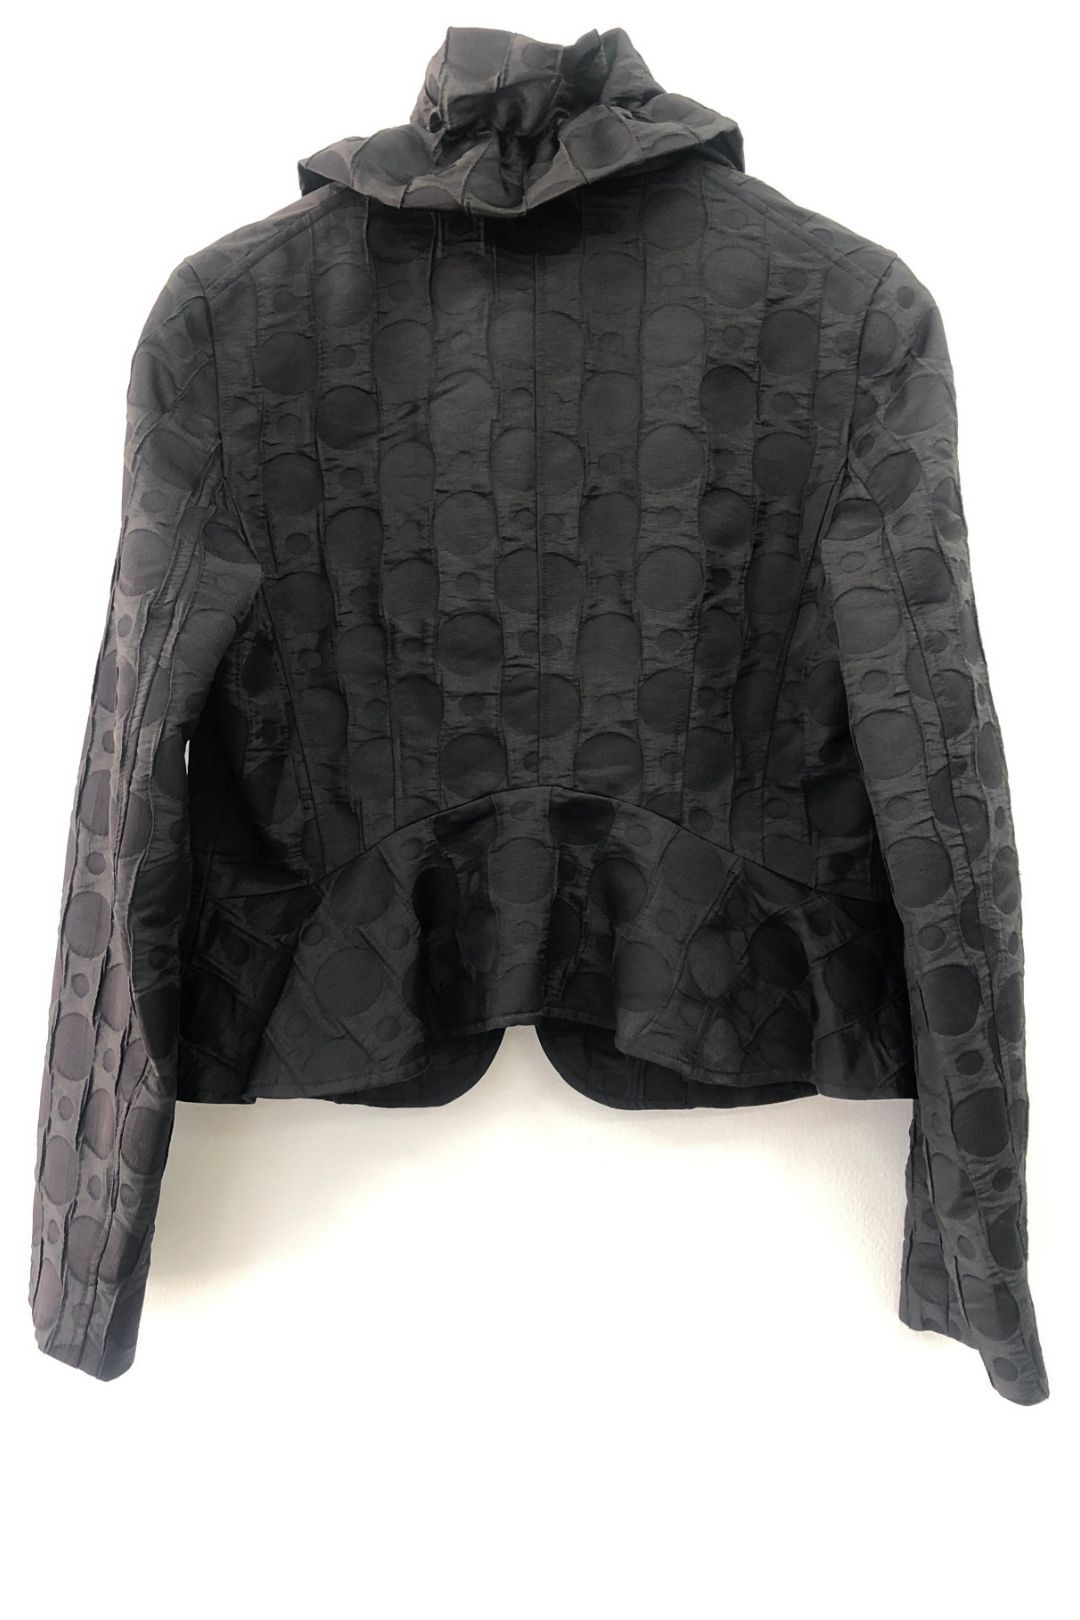 Jigsaw - Black Textured Cropped Jacket